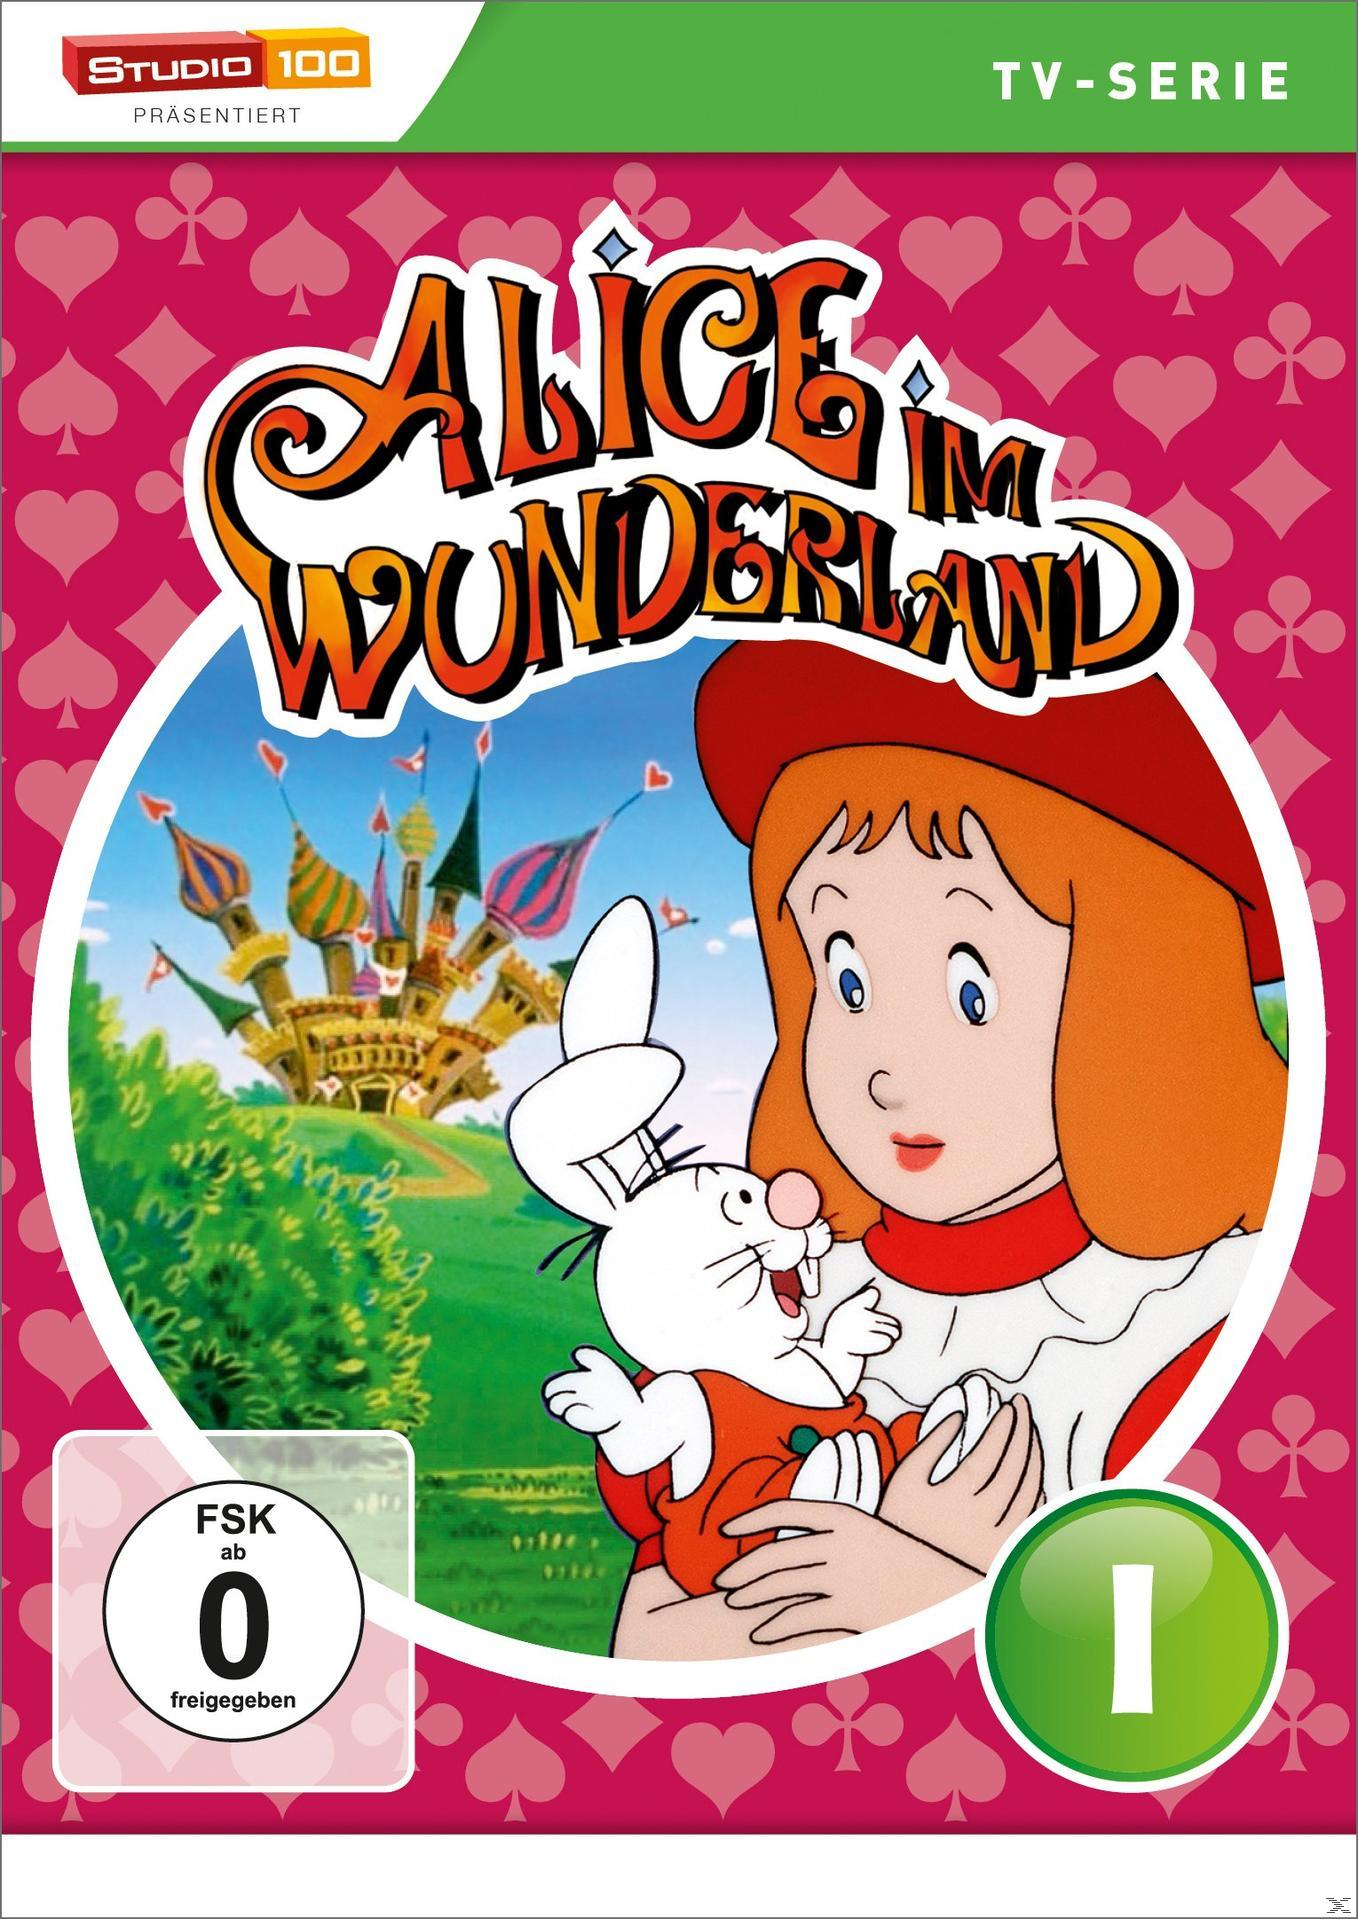 Wunderland Teil 1 im Alice - DVD